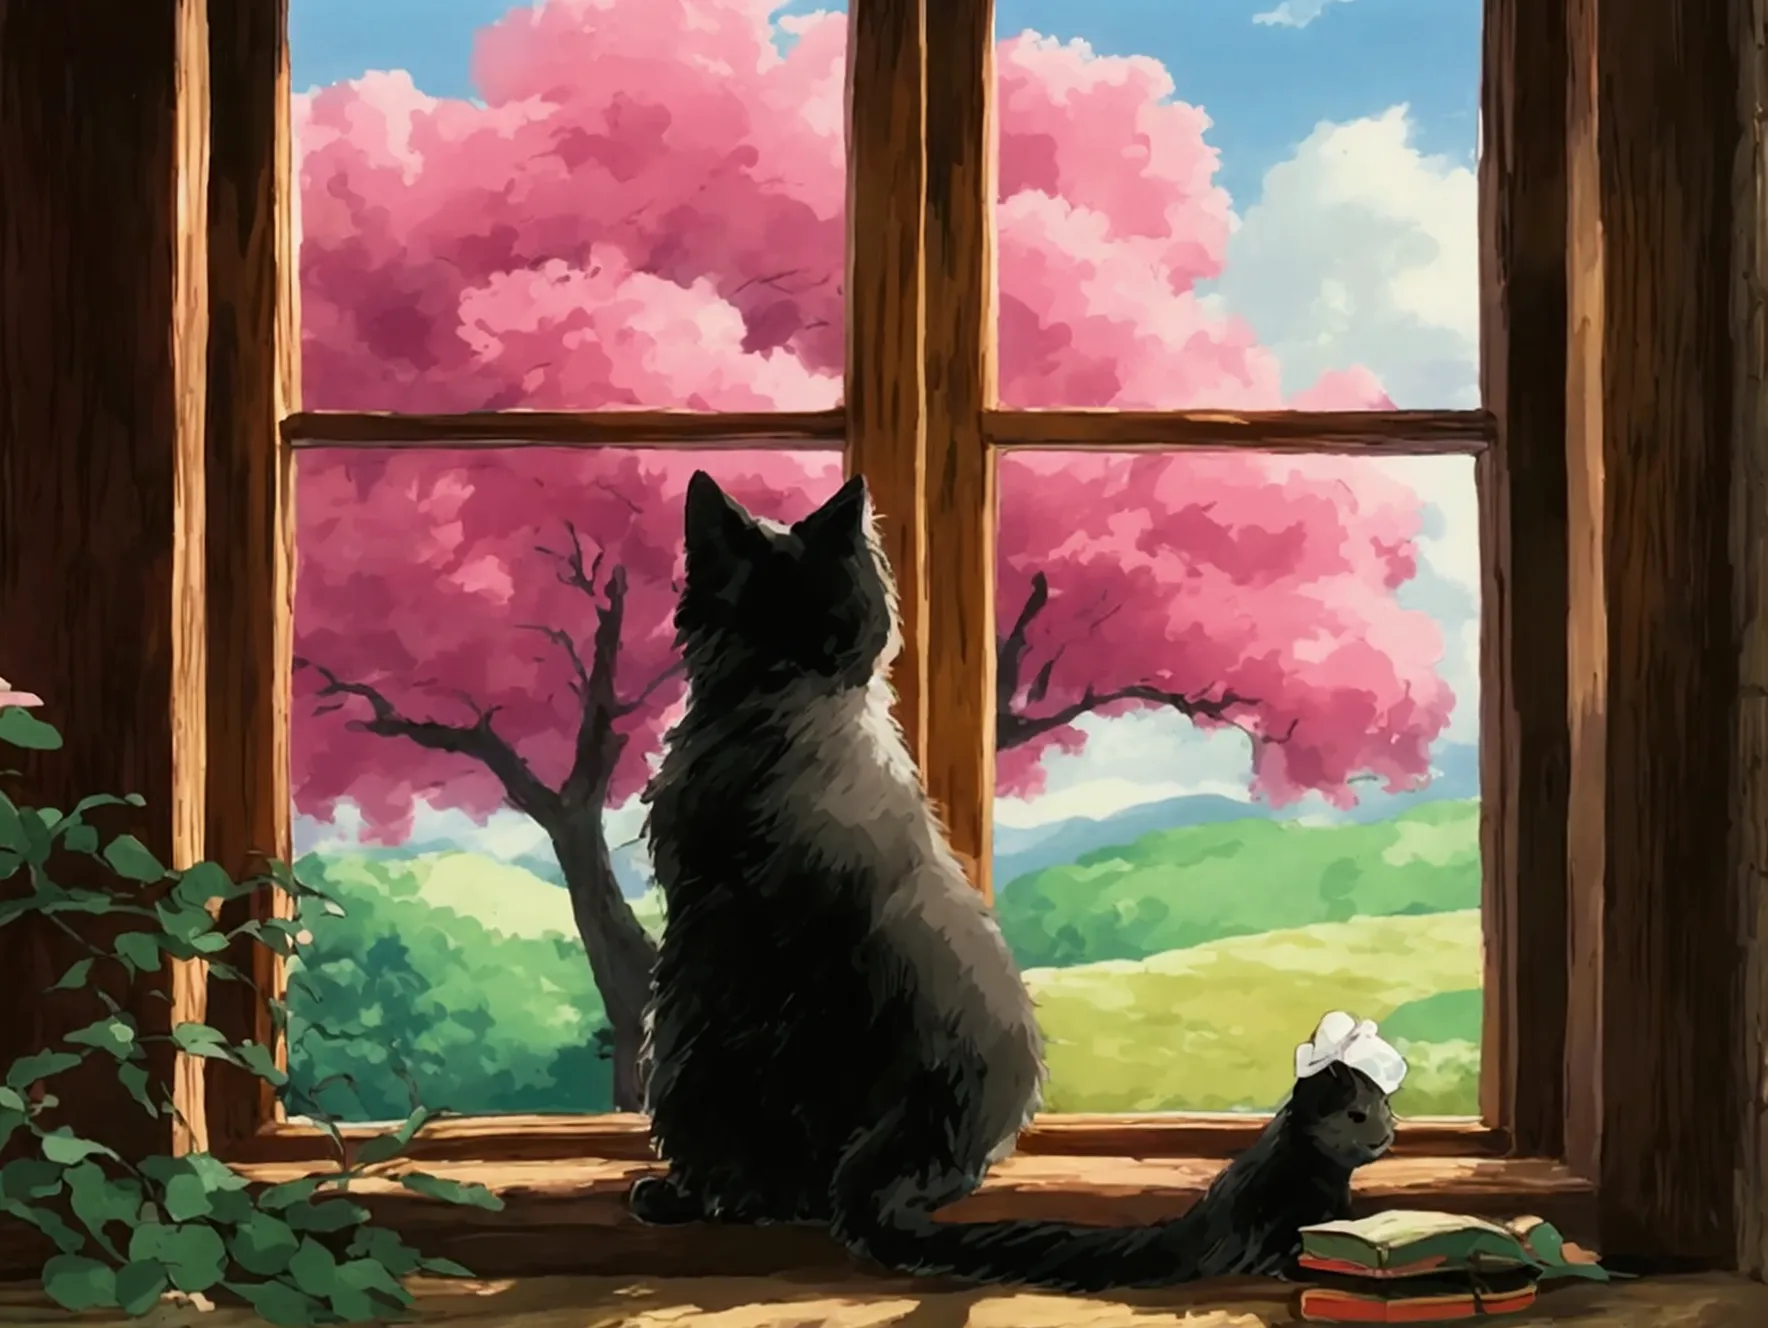 Studio Ghibli Style - Studio ghibli style, big cute black cat is looking out of big wood paned window at a big pink dog wood tre...